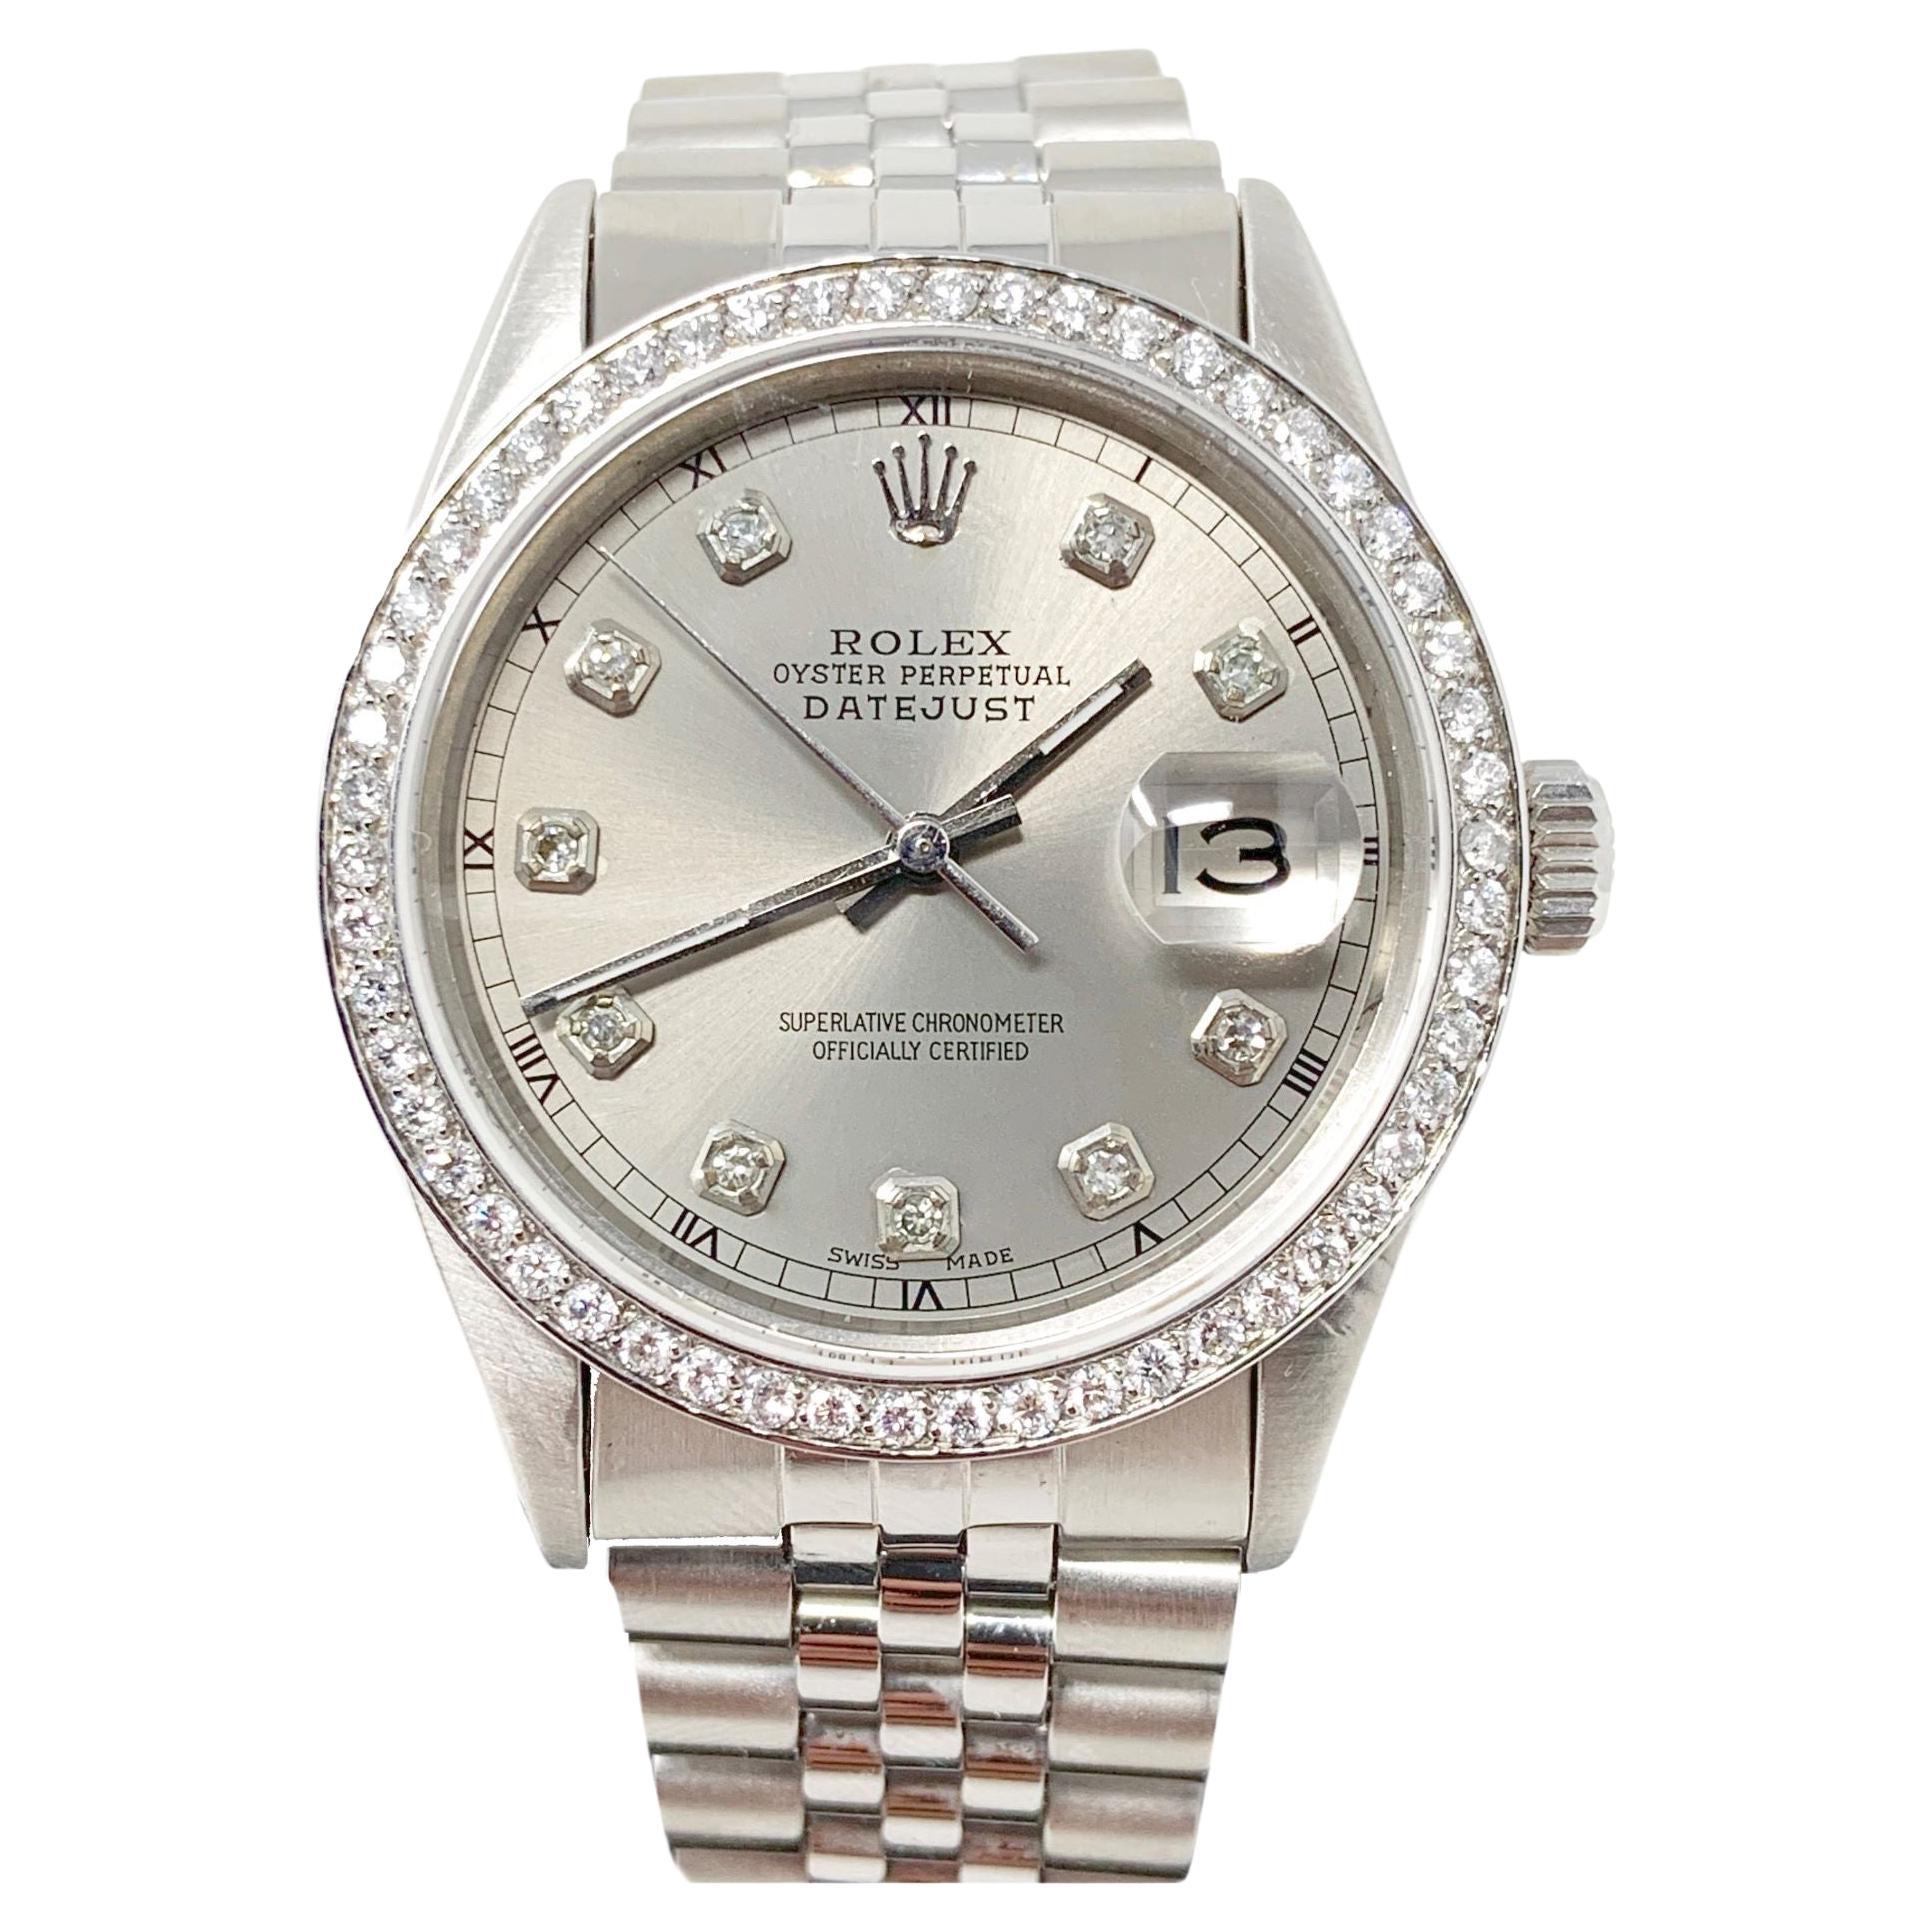 Rolex Datejust 16030 Silver Diamond